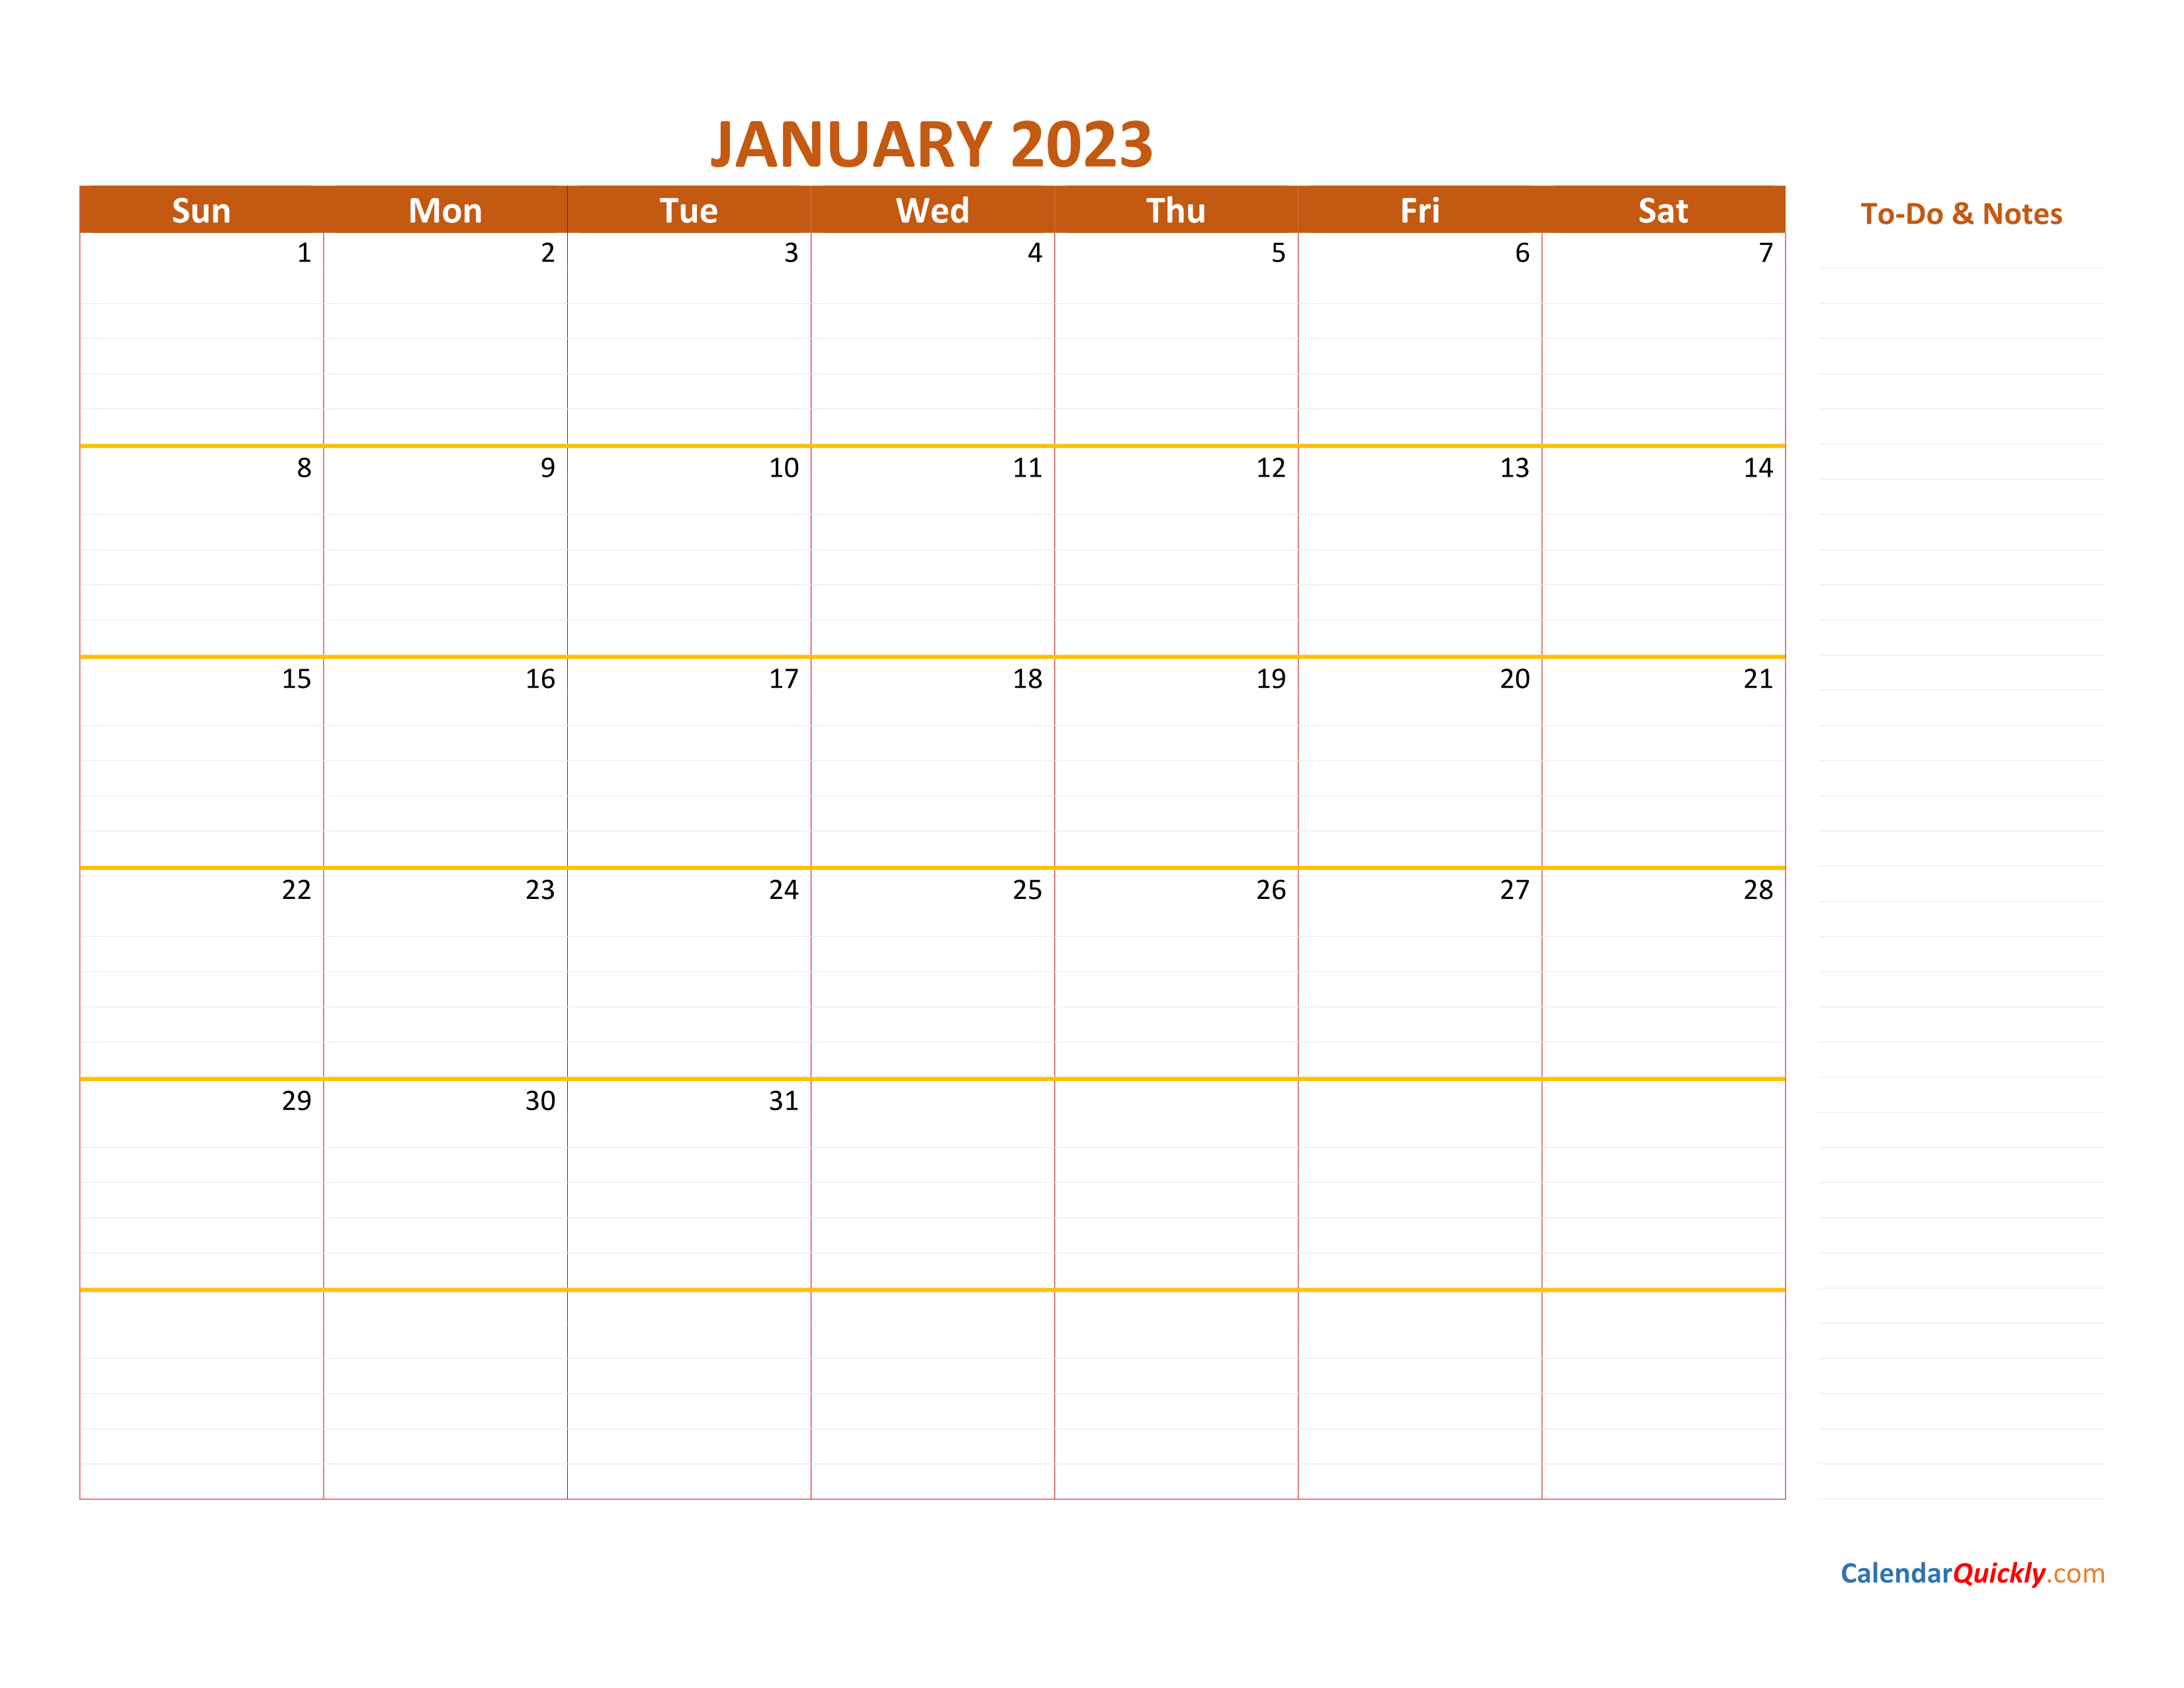 Monthly 2023 Calendar Calendar Quickly FREE Printable Online